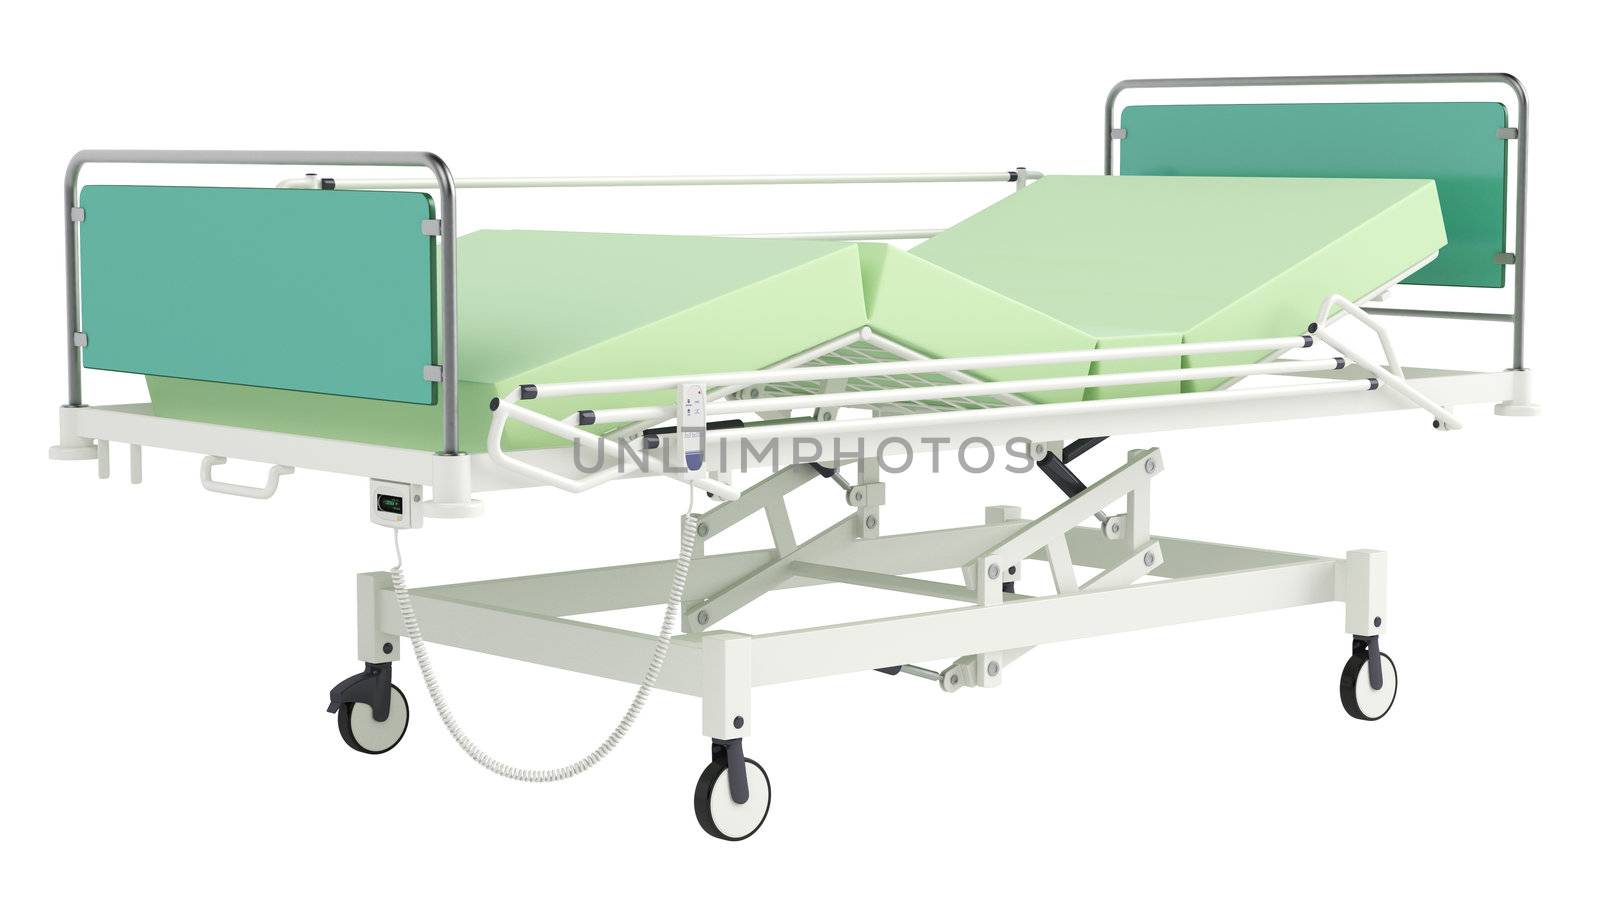 Mobile hospital bed by AlexanderMorozov